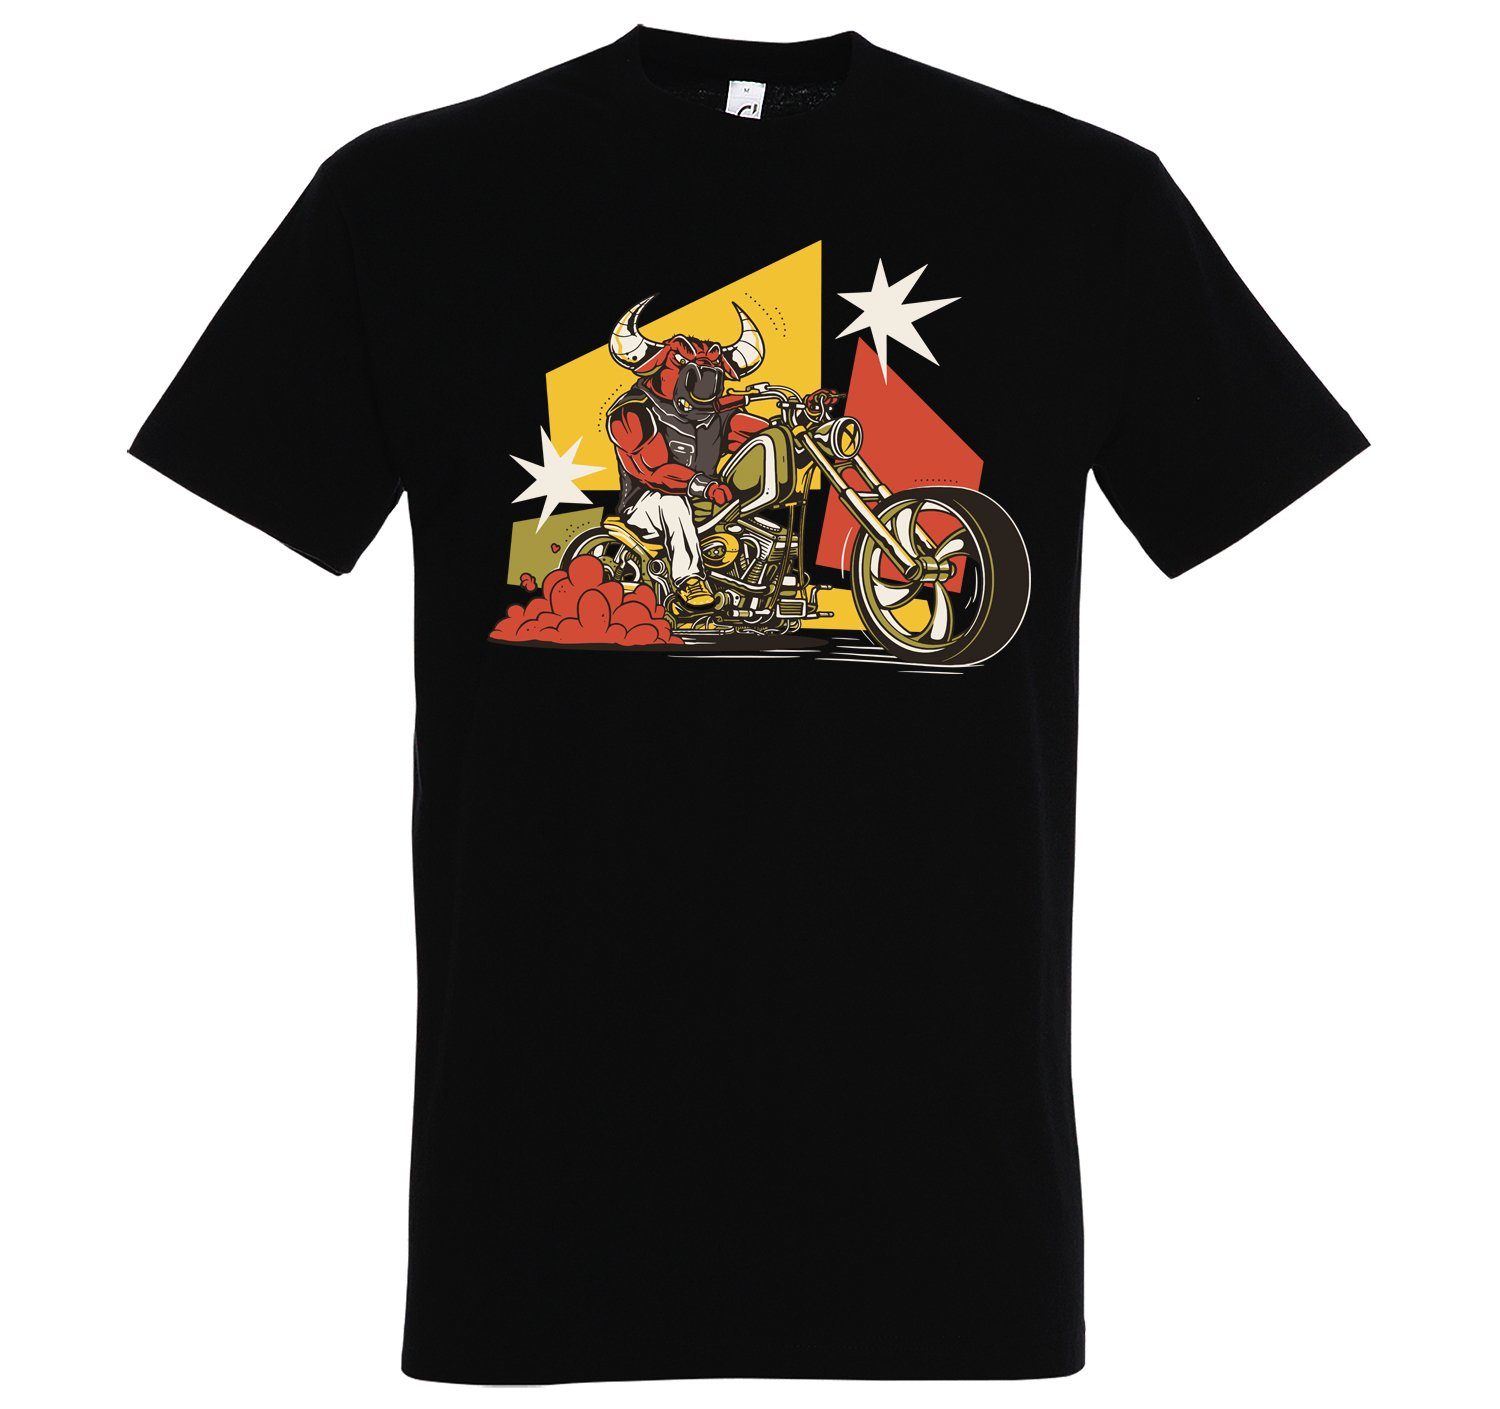 Schwarz T-Shirt Designz Frontprint Biker Herren T-Shirt trendigem Bull mit Youth